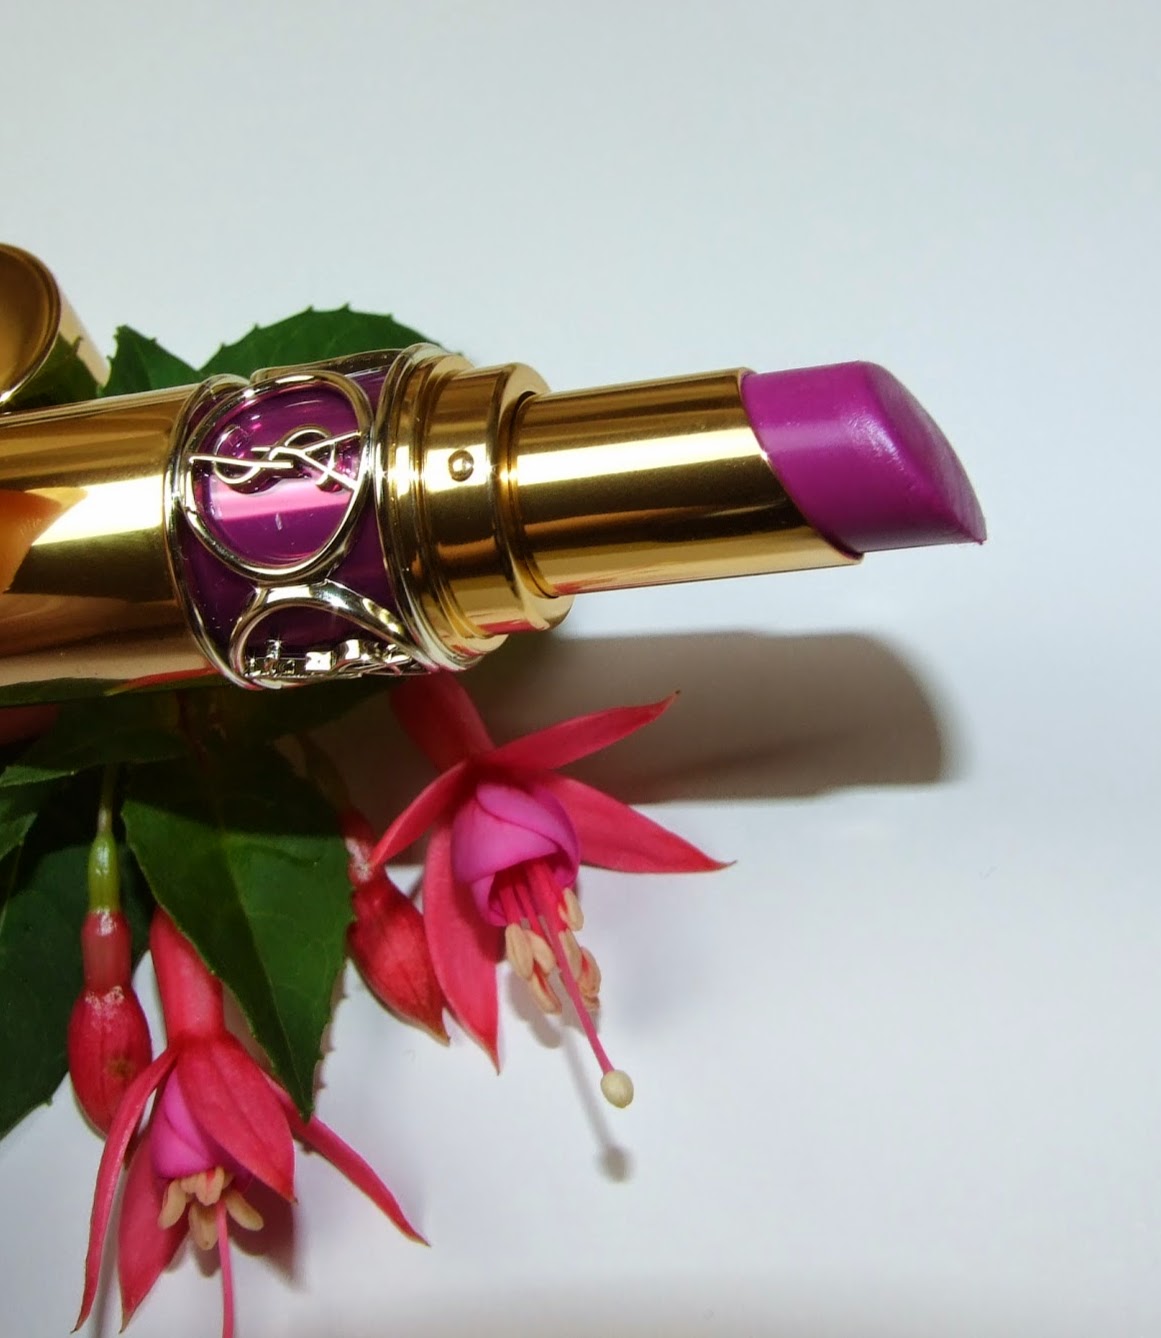 YSL Rouge volupte shine lipstick Fuchsia in rage No 19 beauty blog review swatch lips